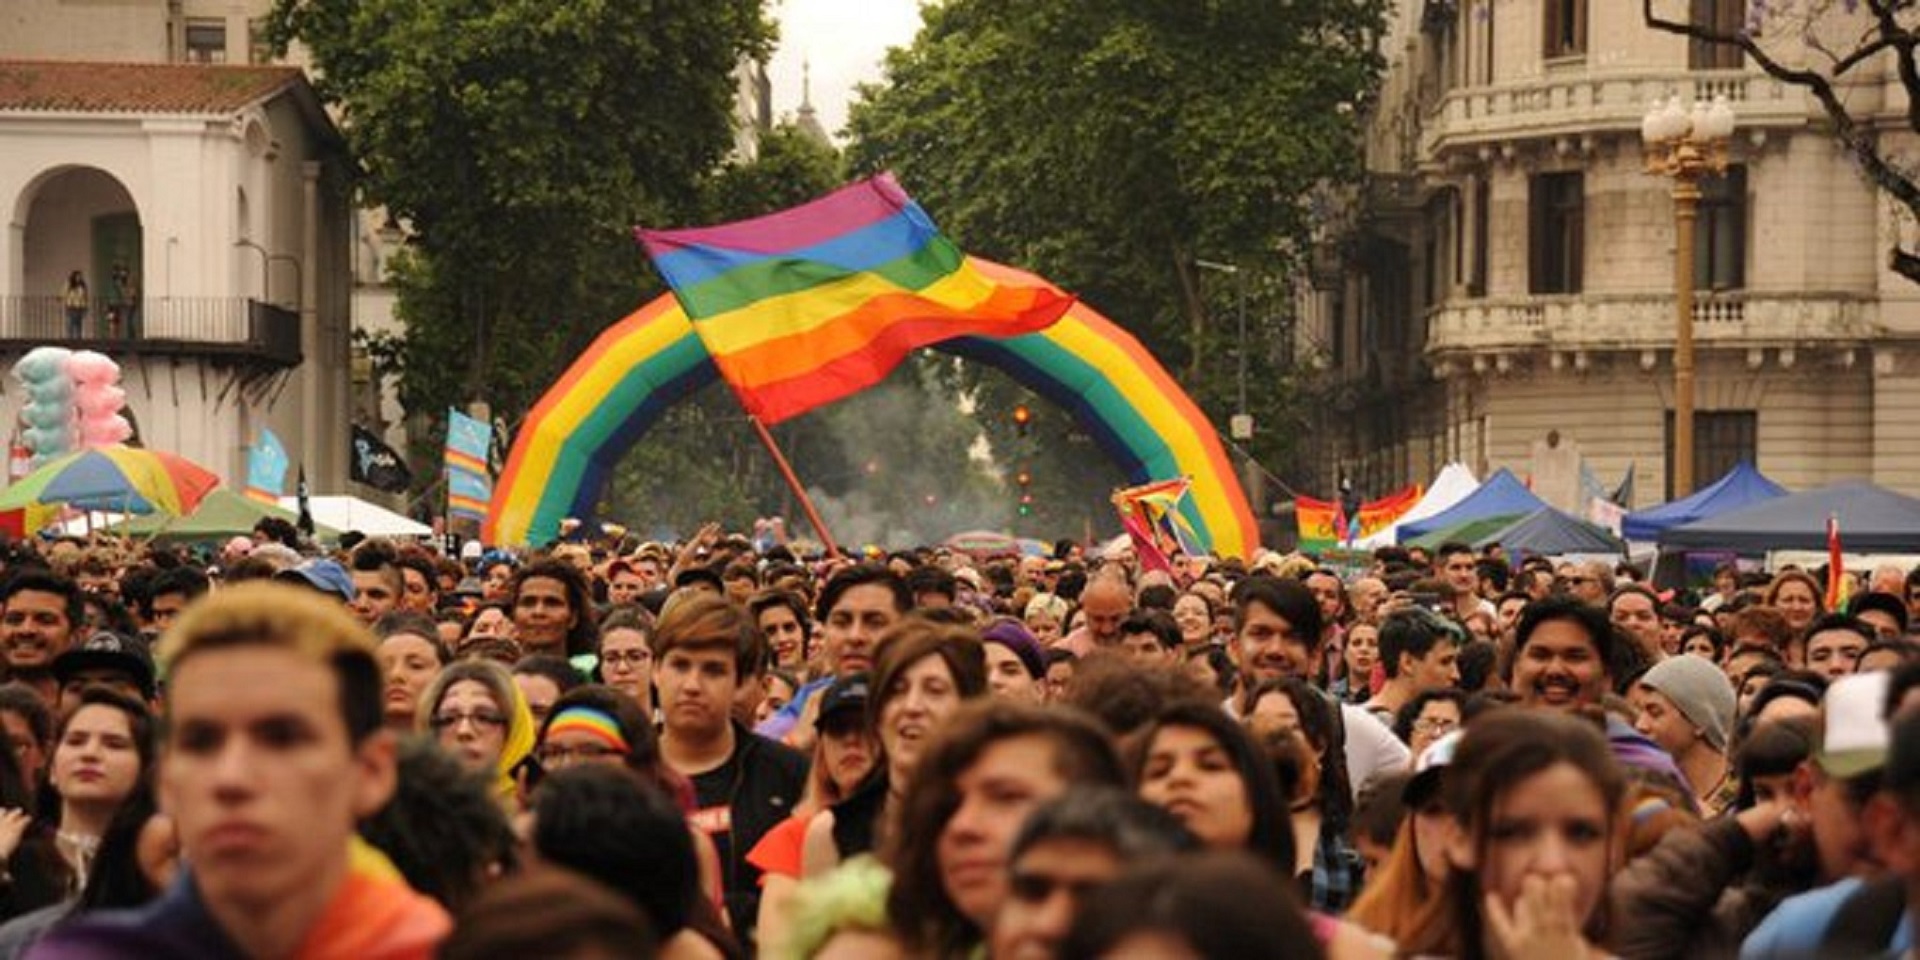 Miles De Personas Participaron De La Marcha Del Orgullo Lgtbq Impulso